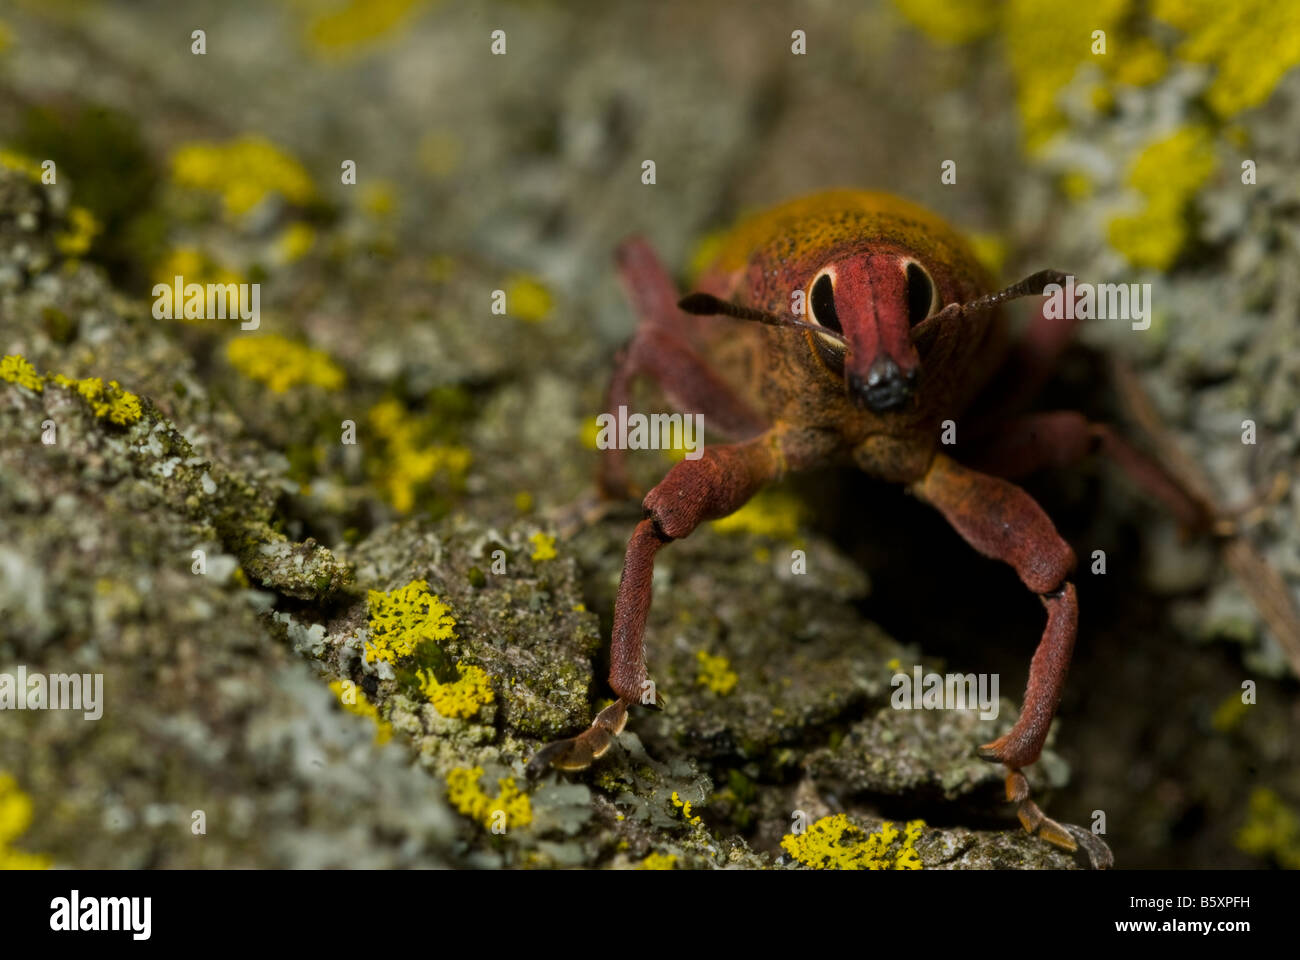 Lixomorphus algirus Curculionidae Coleoptera, Rome, Italy Stock Photo